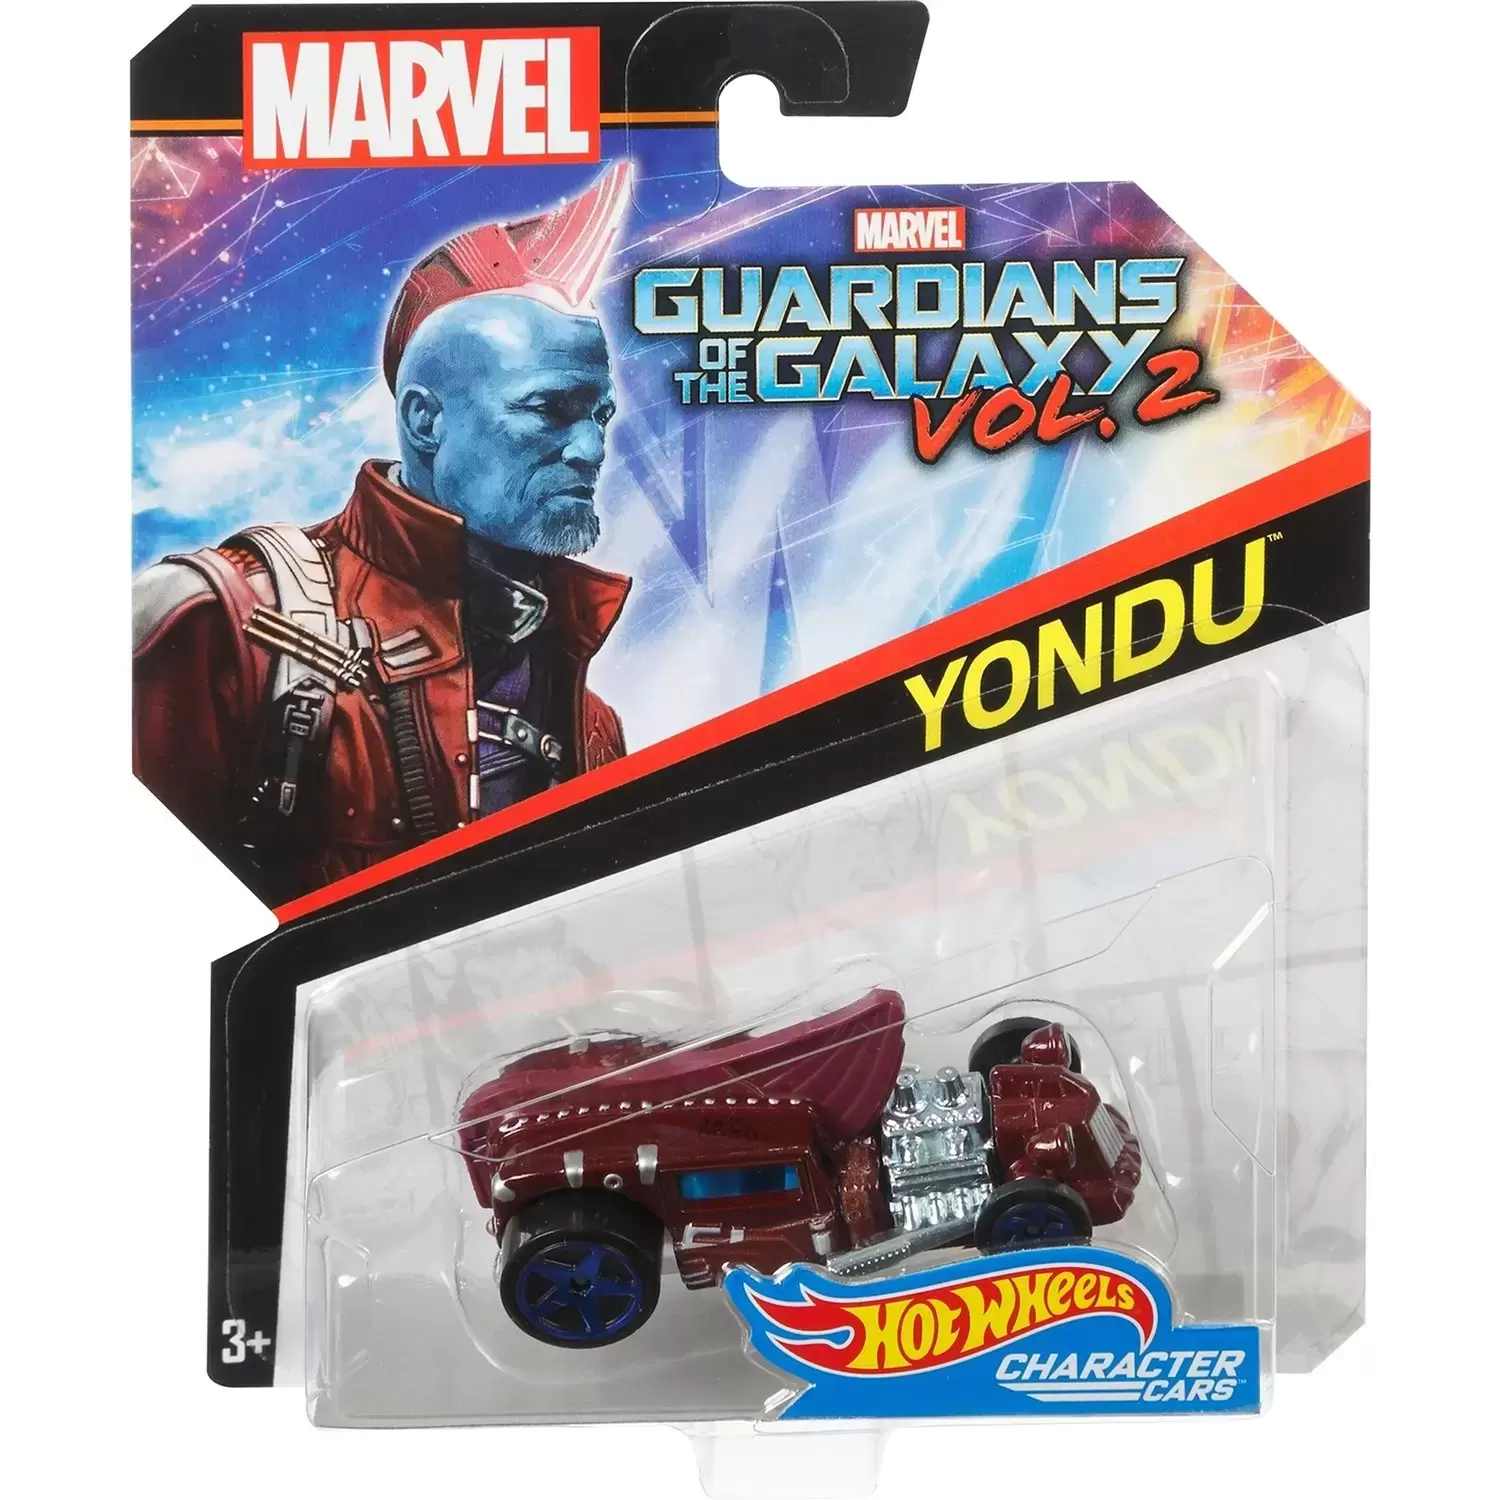 Marvel Character Cars - Guardians of the Galaxy Vol.2 - Yondu